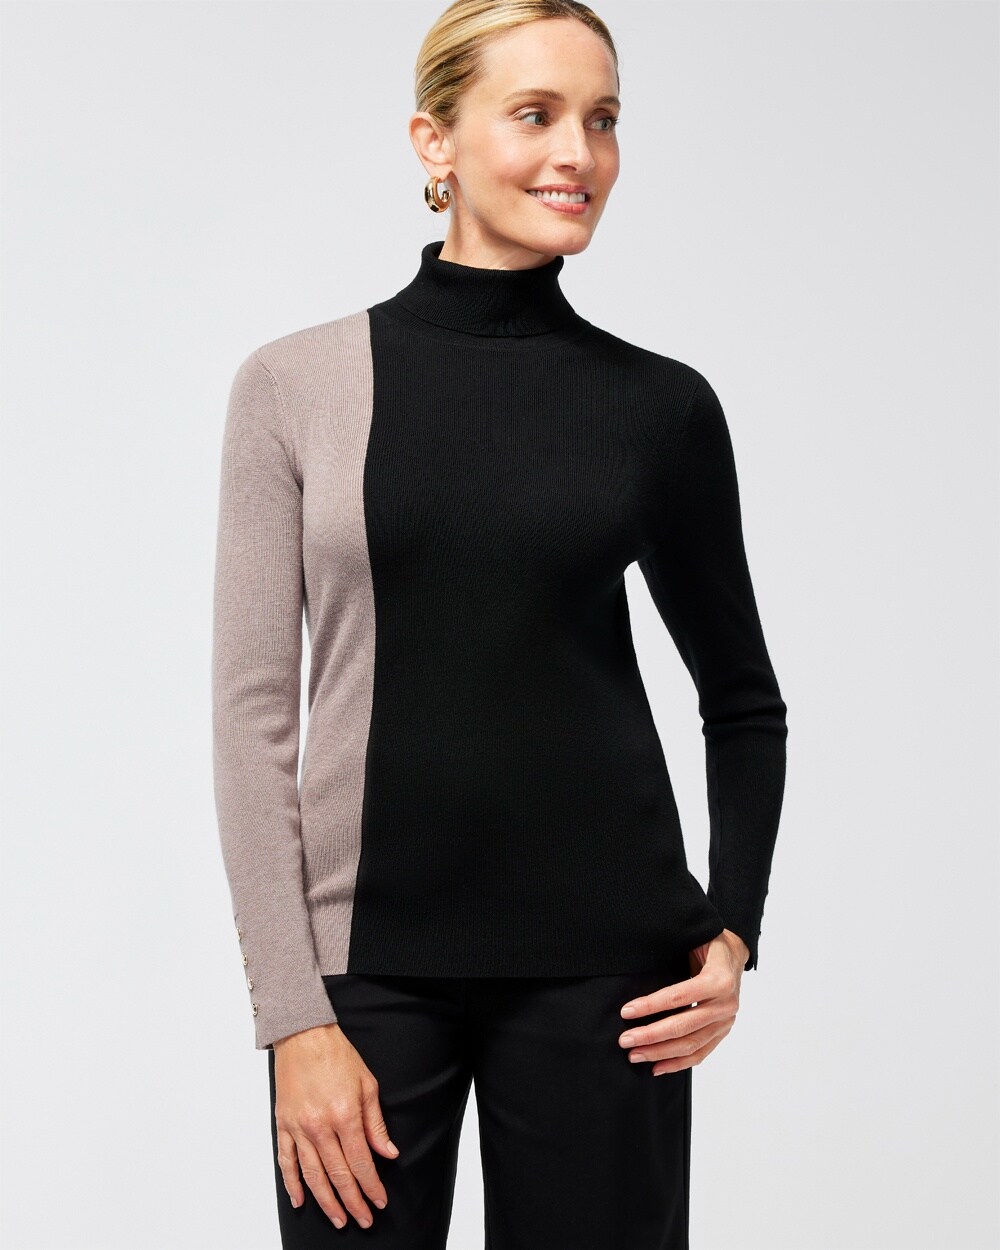 ECOVERO Neutral Colorblock Turtleneck Sweater